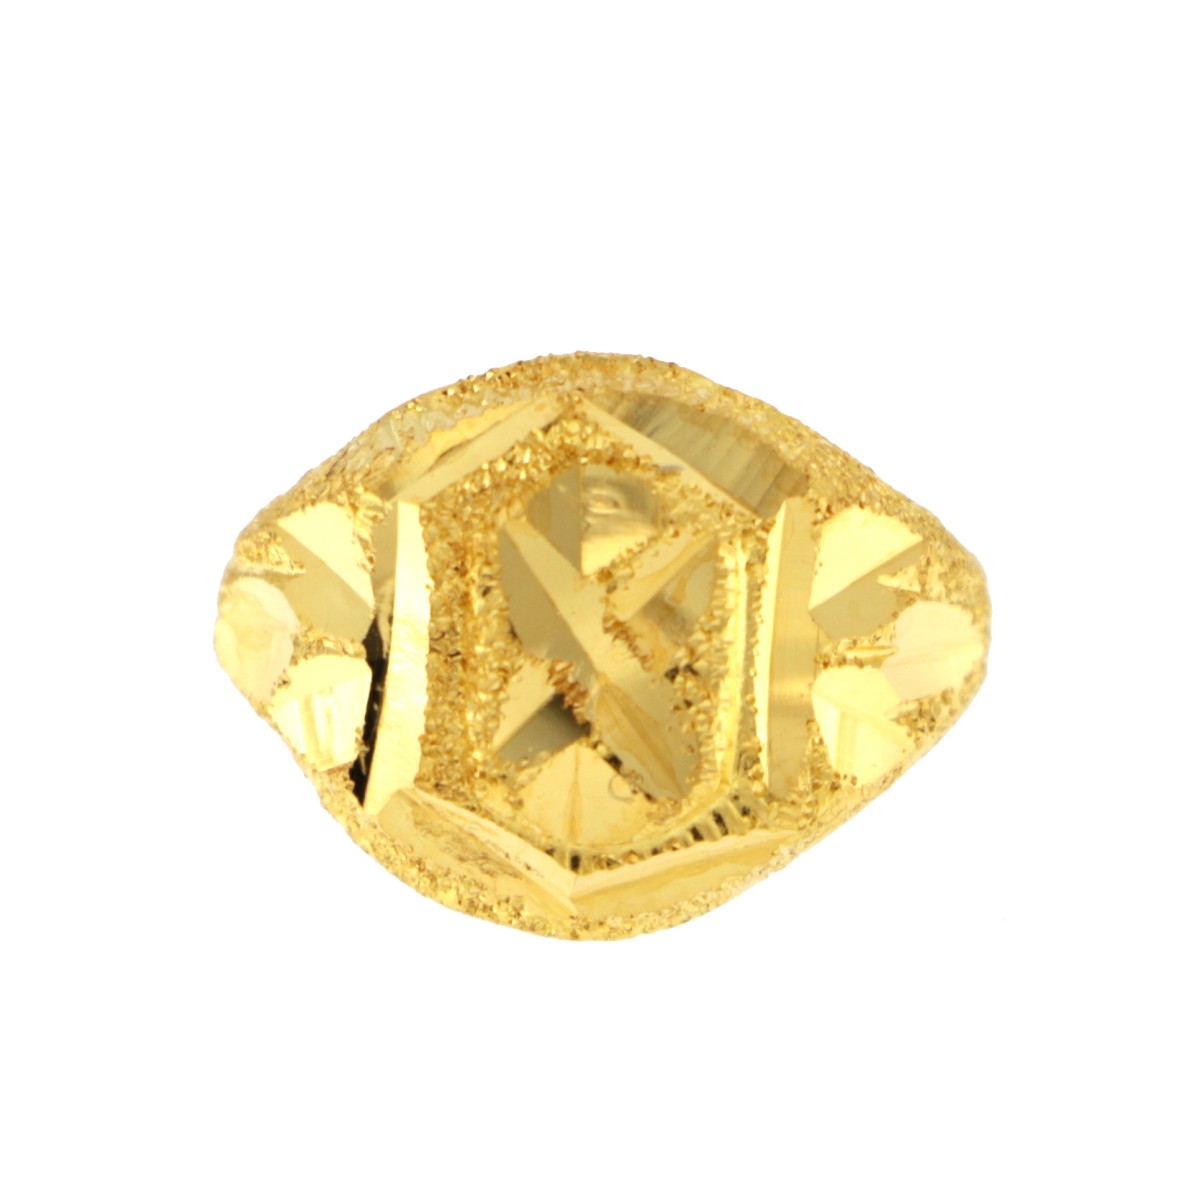 22ct Gold Kid's Ring